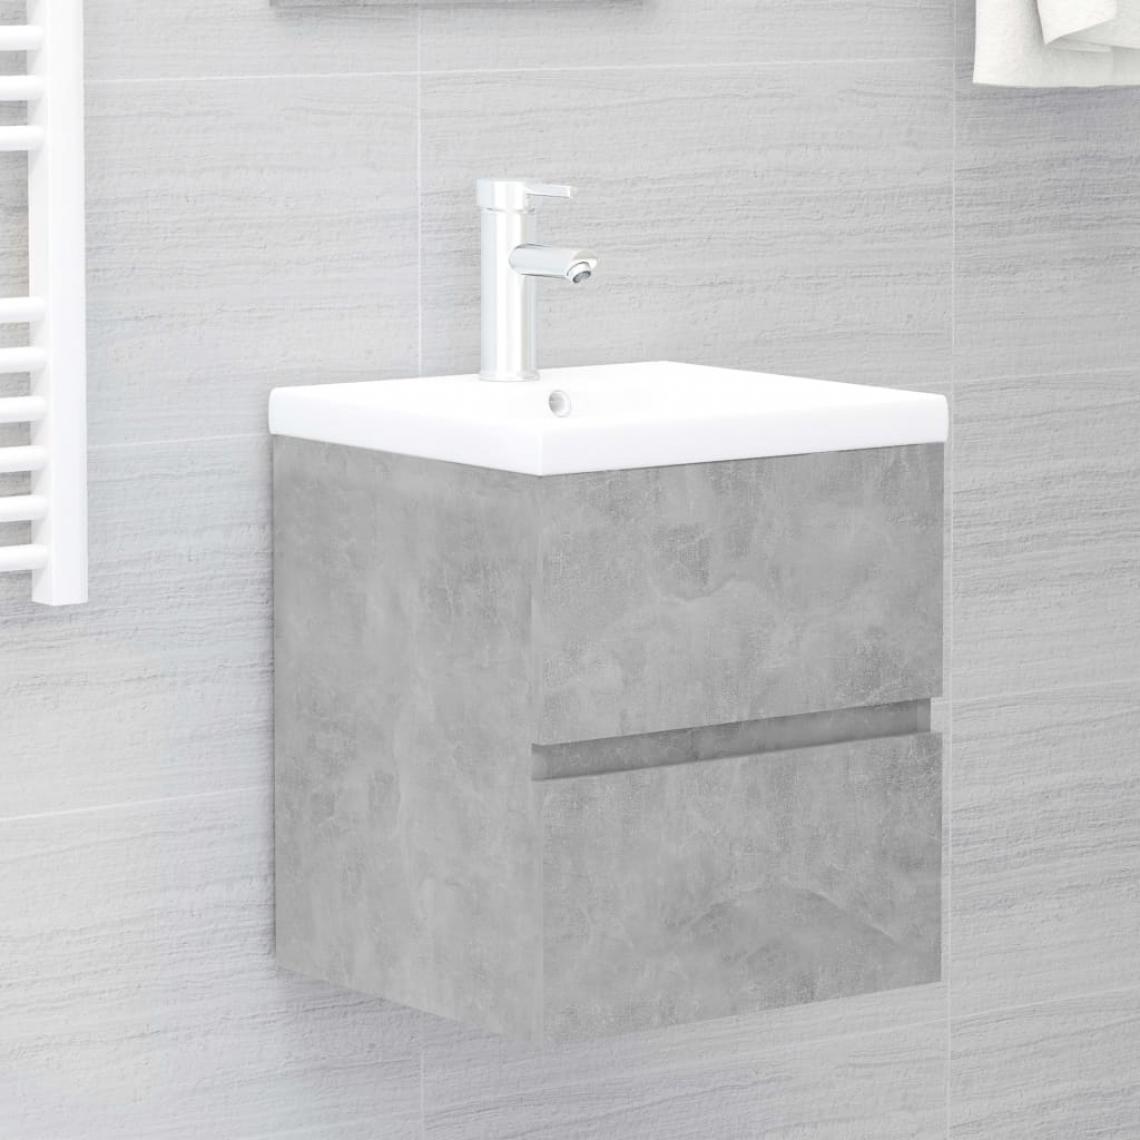 Vidaxl - vidaXL Armoire d'évier avec lavabo intégré Gris béton Aggloméré - meuble bas salle de bain